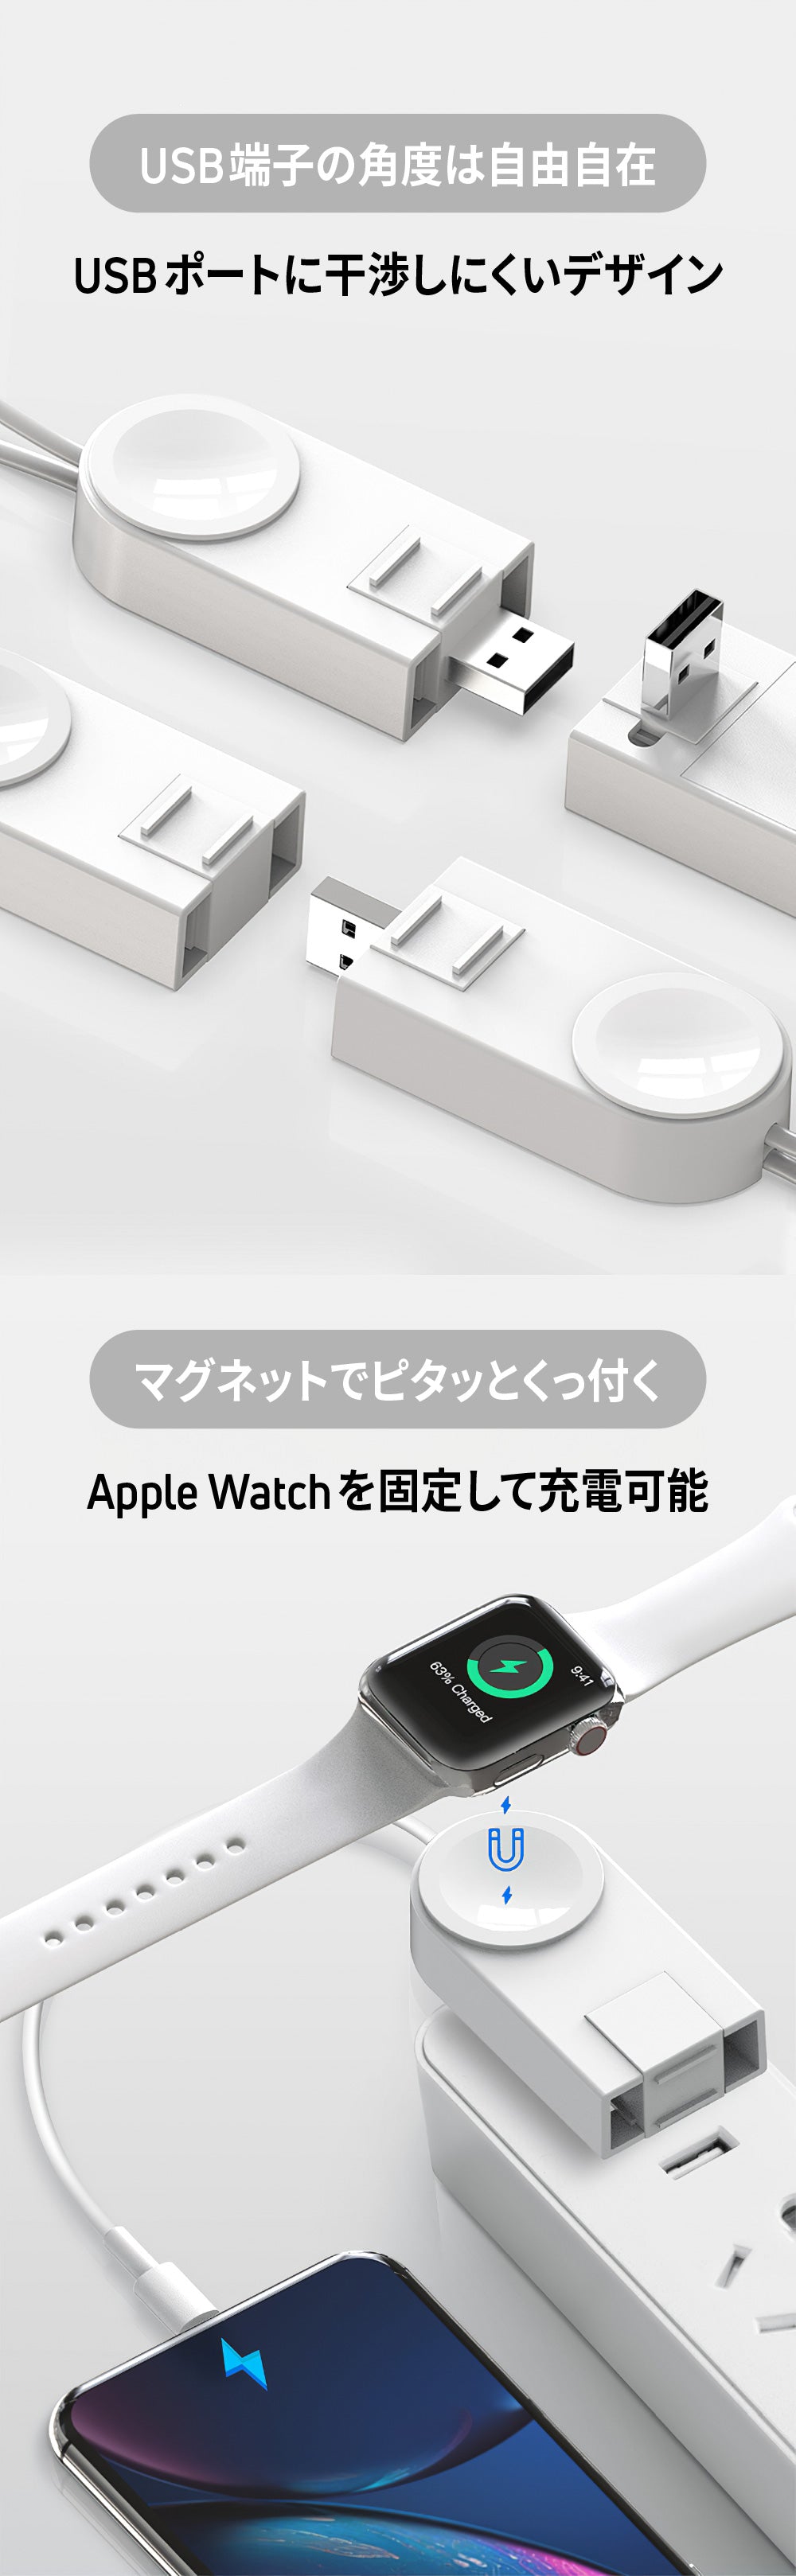 Applewatch 充電器 ホワイト 互換品 USBポート ケーブル AW